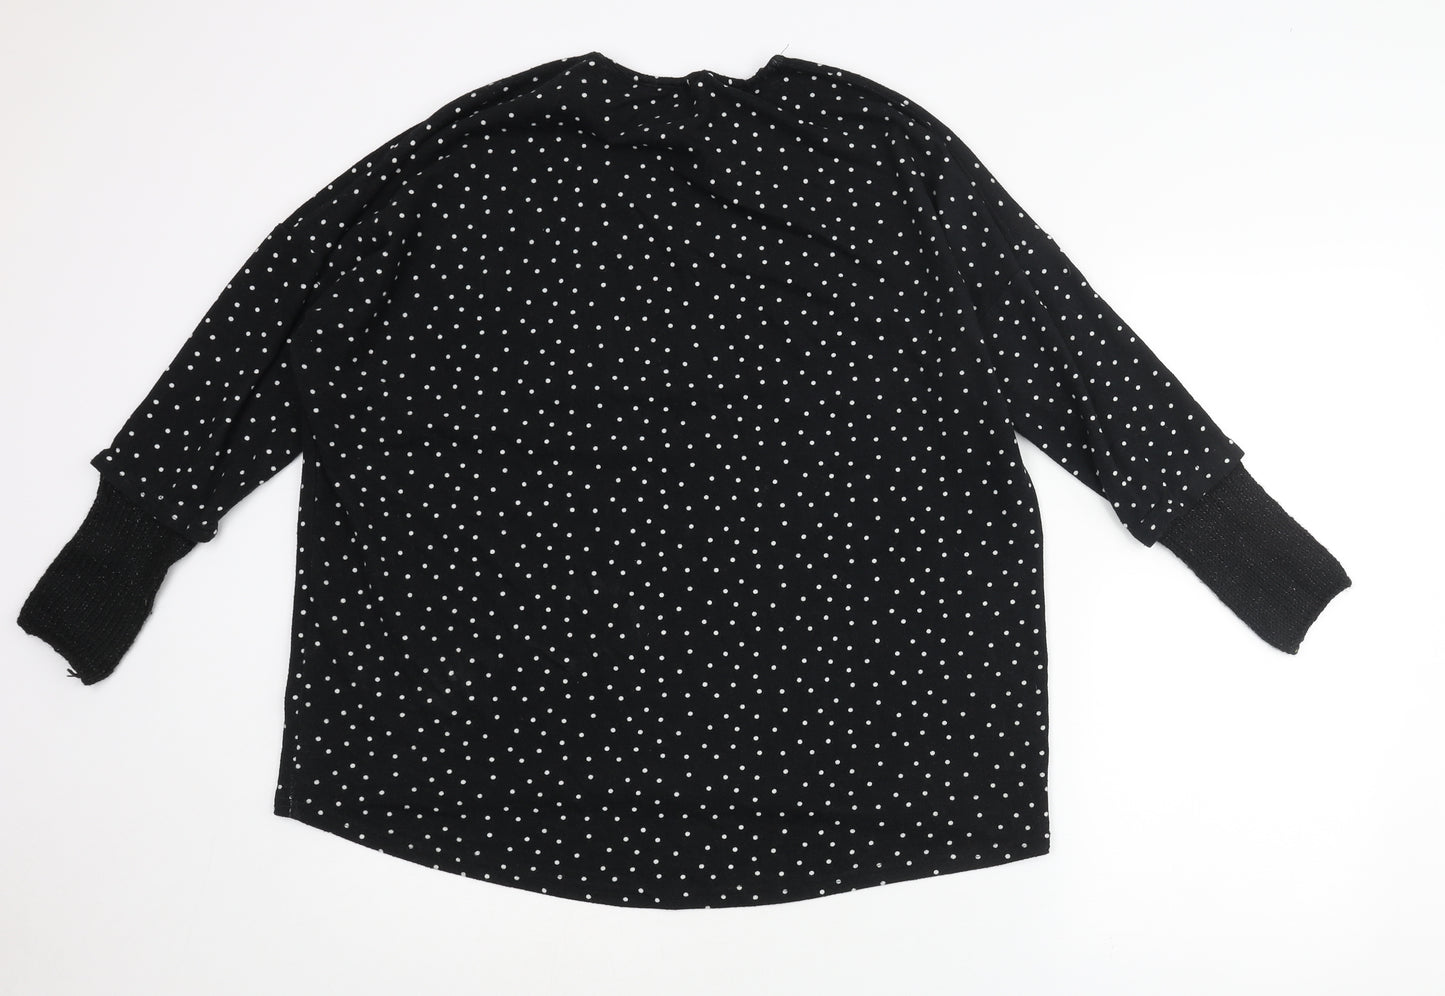 Jacqueline de Yong Womens Black Round Neck Polka Dot Polyester Pullover Jumper Size L